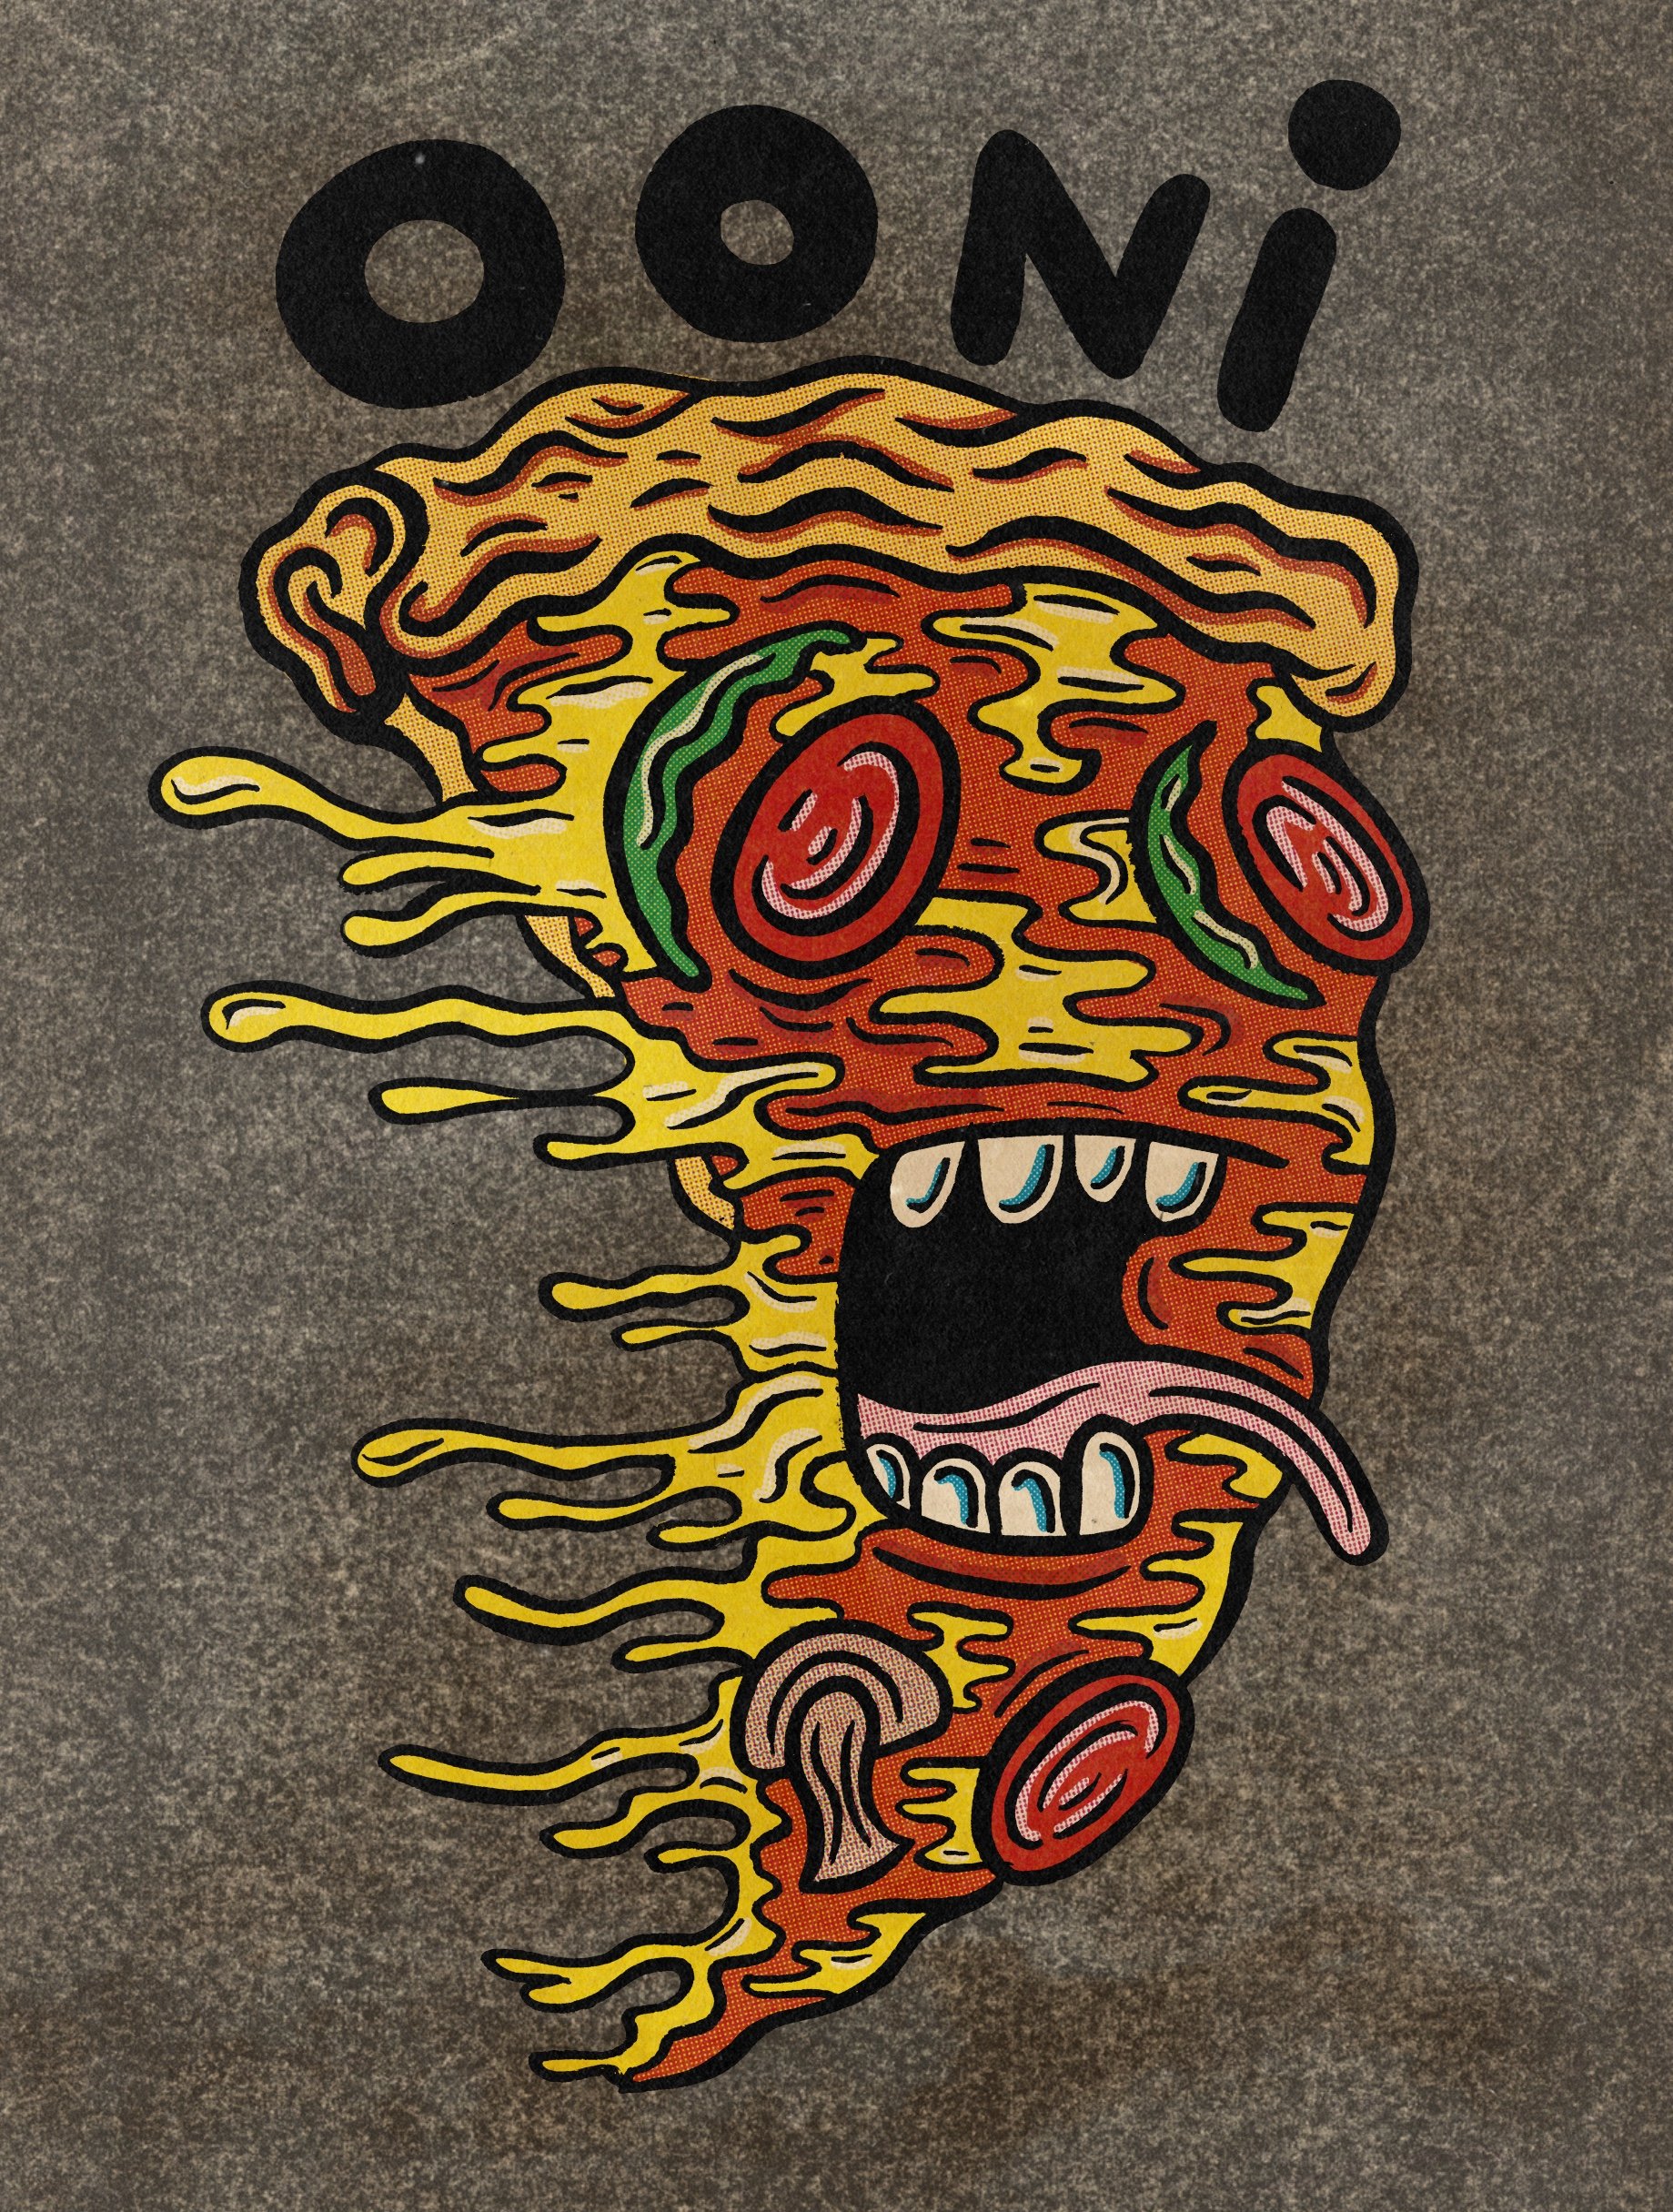 Screaming pizza.jpg